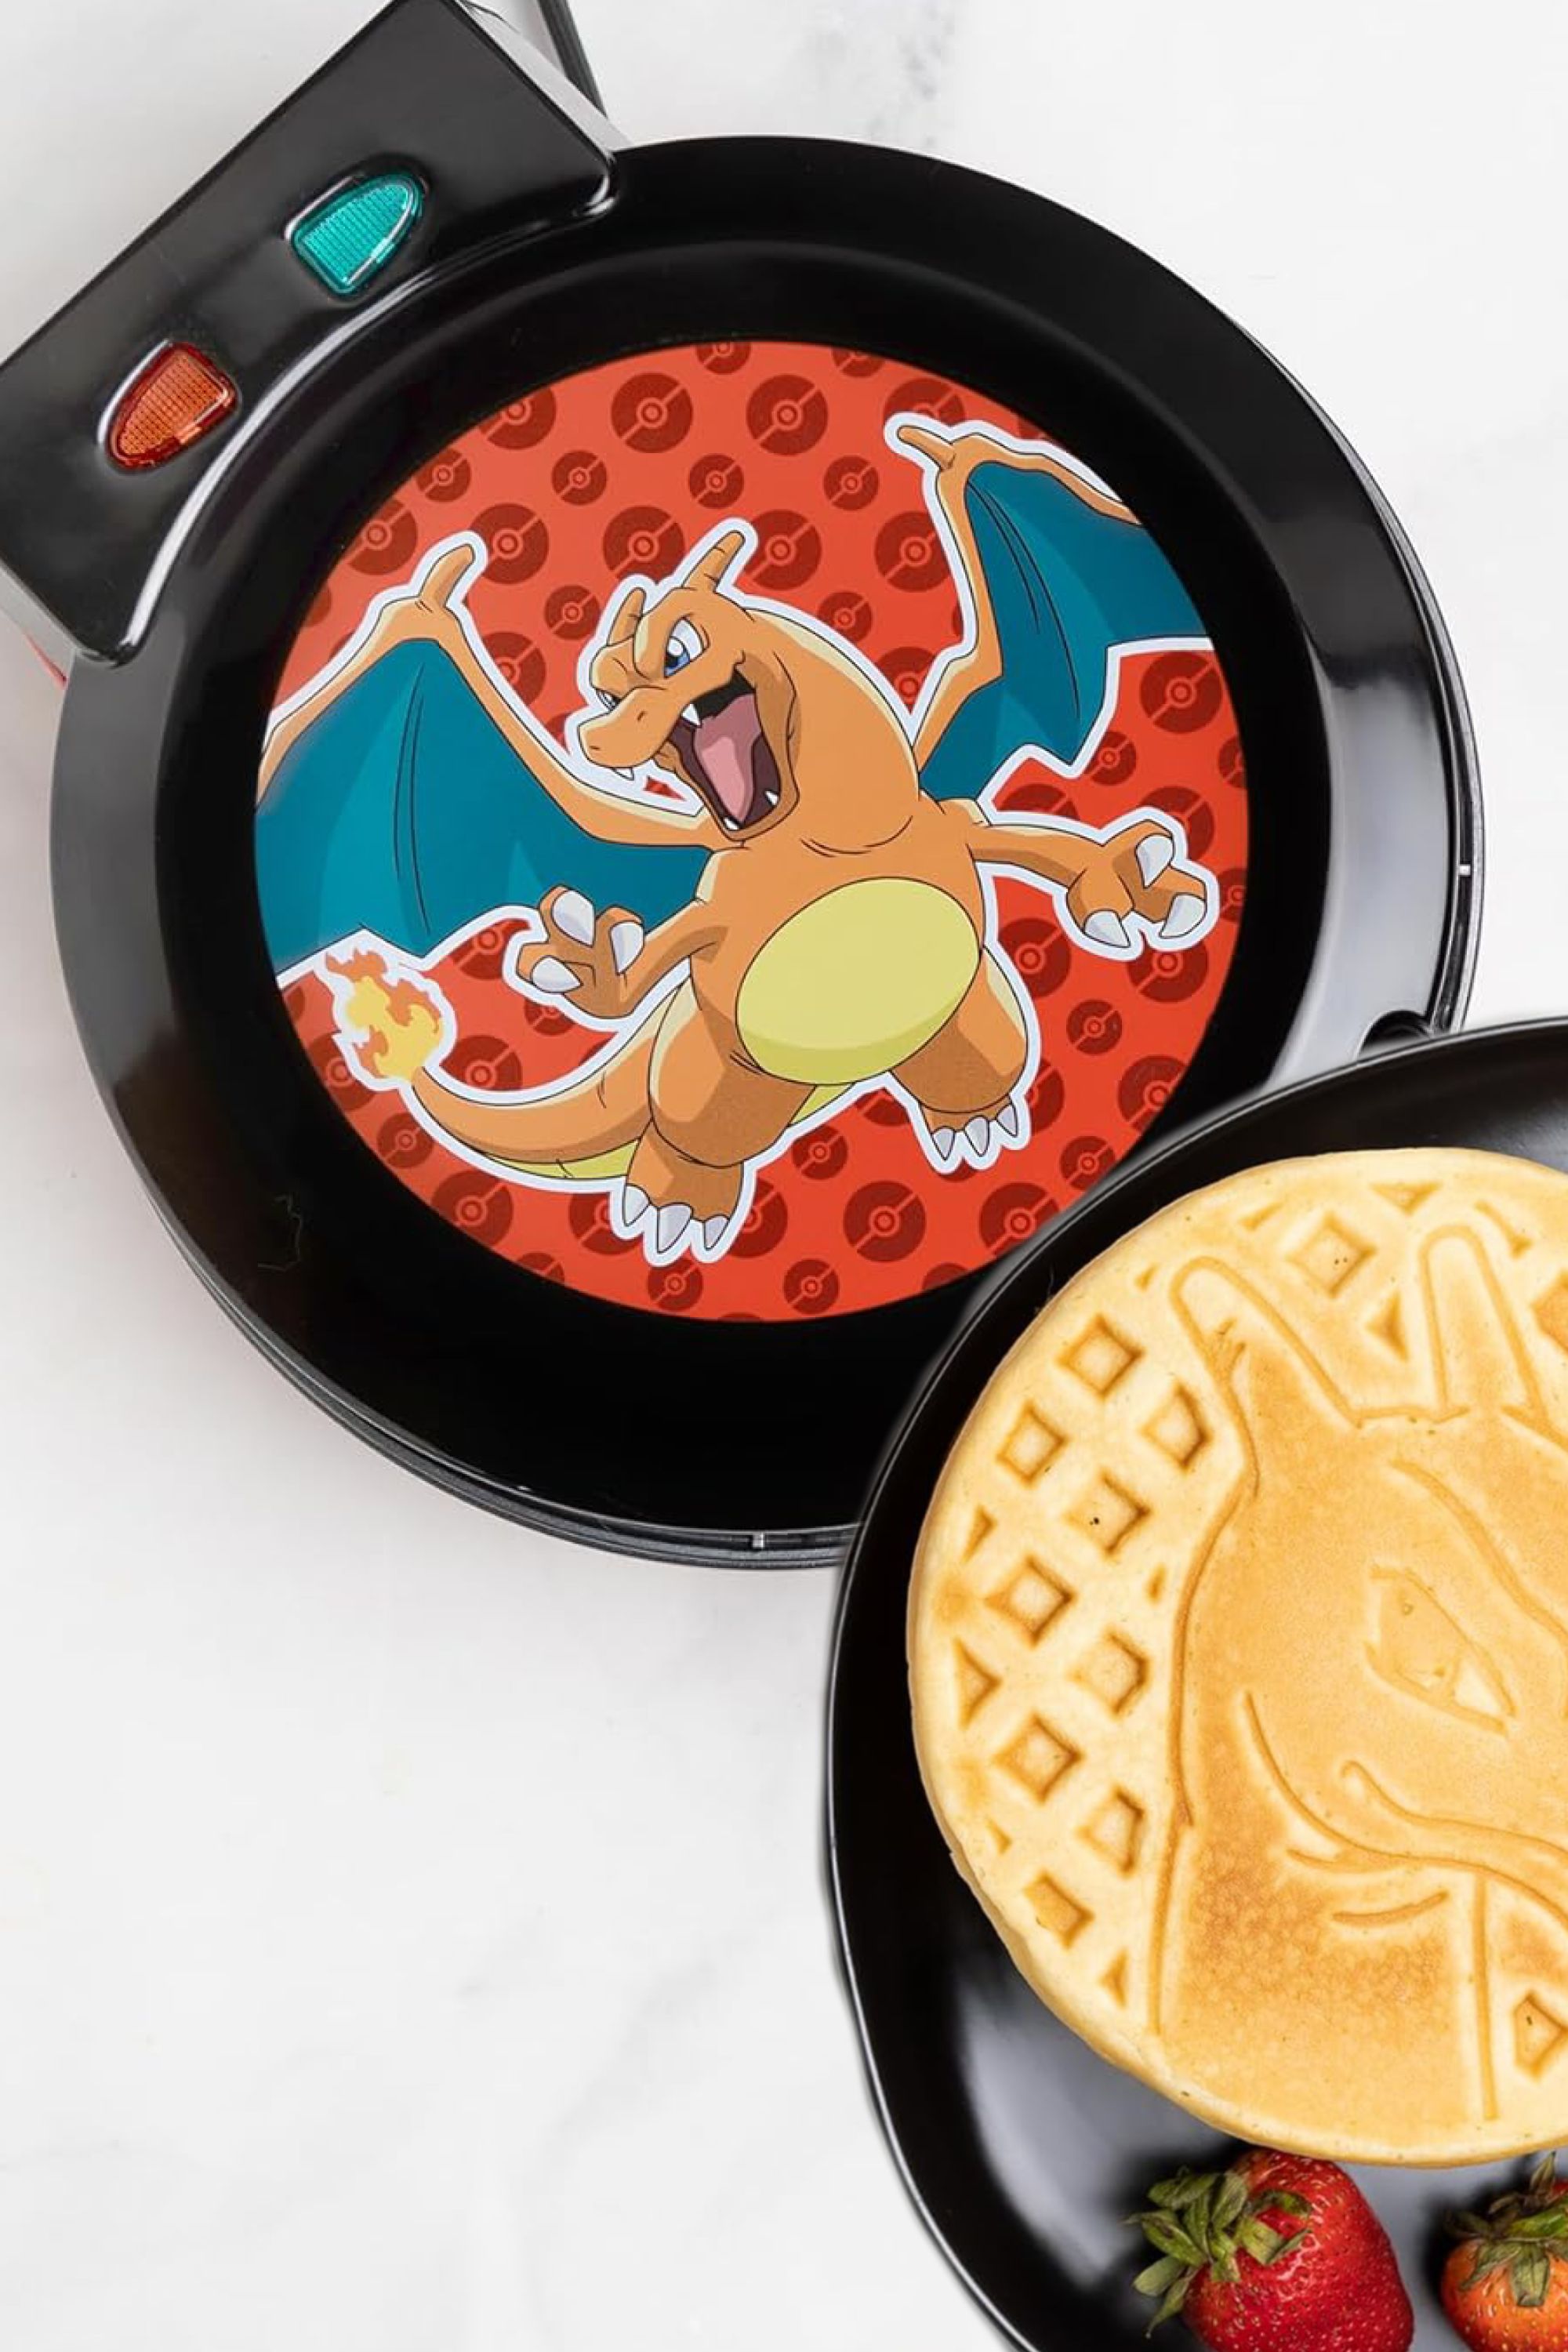 Uncanny Brands Charizard Waffle Maker